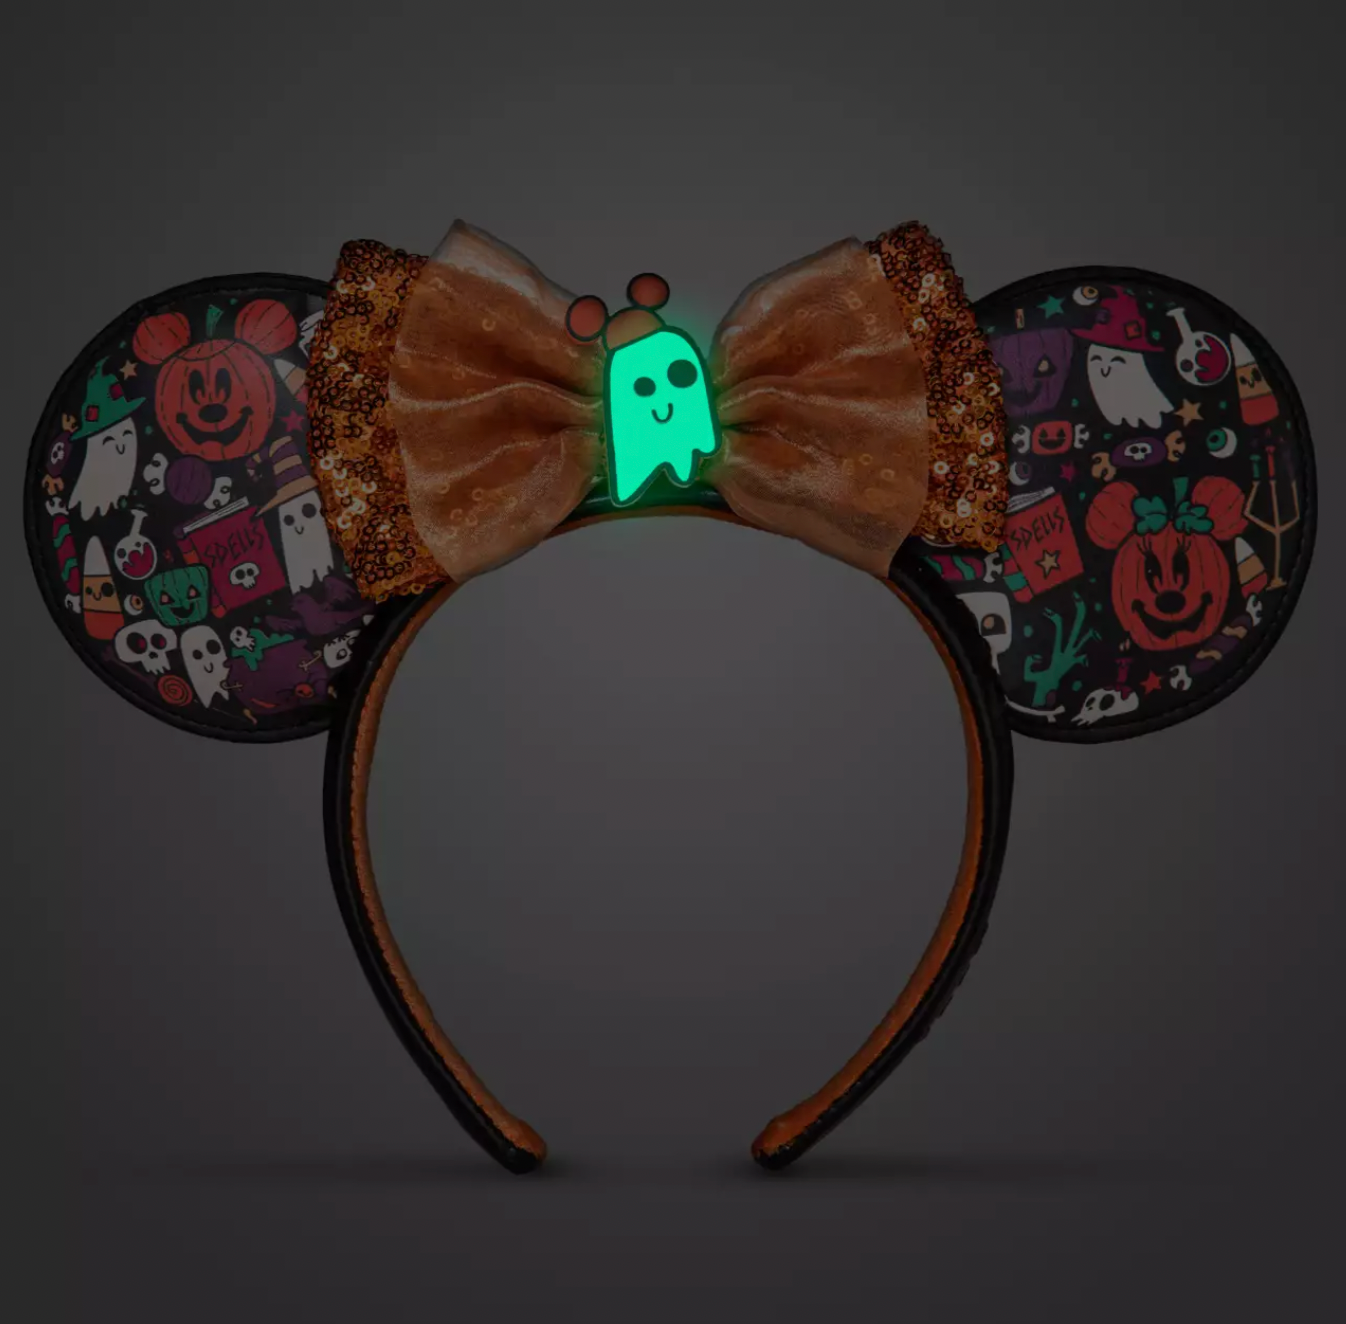 Disney Halloween Minnie Boo Glow in the Dark Ghost Ear Headband Sequined Bow New